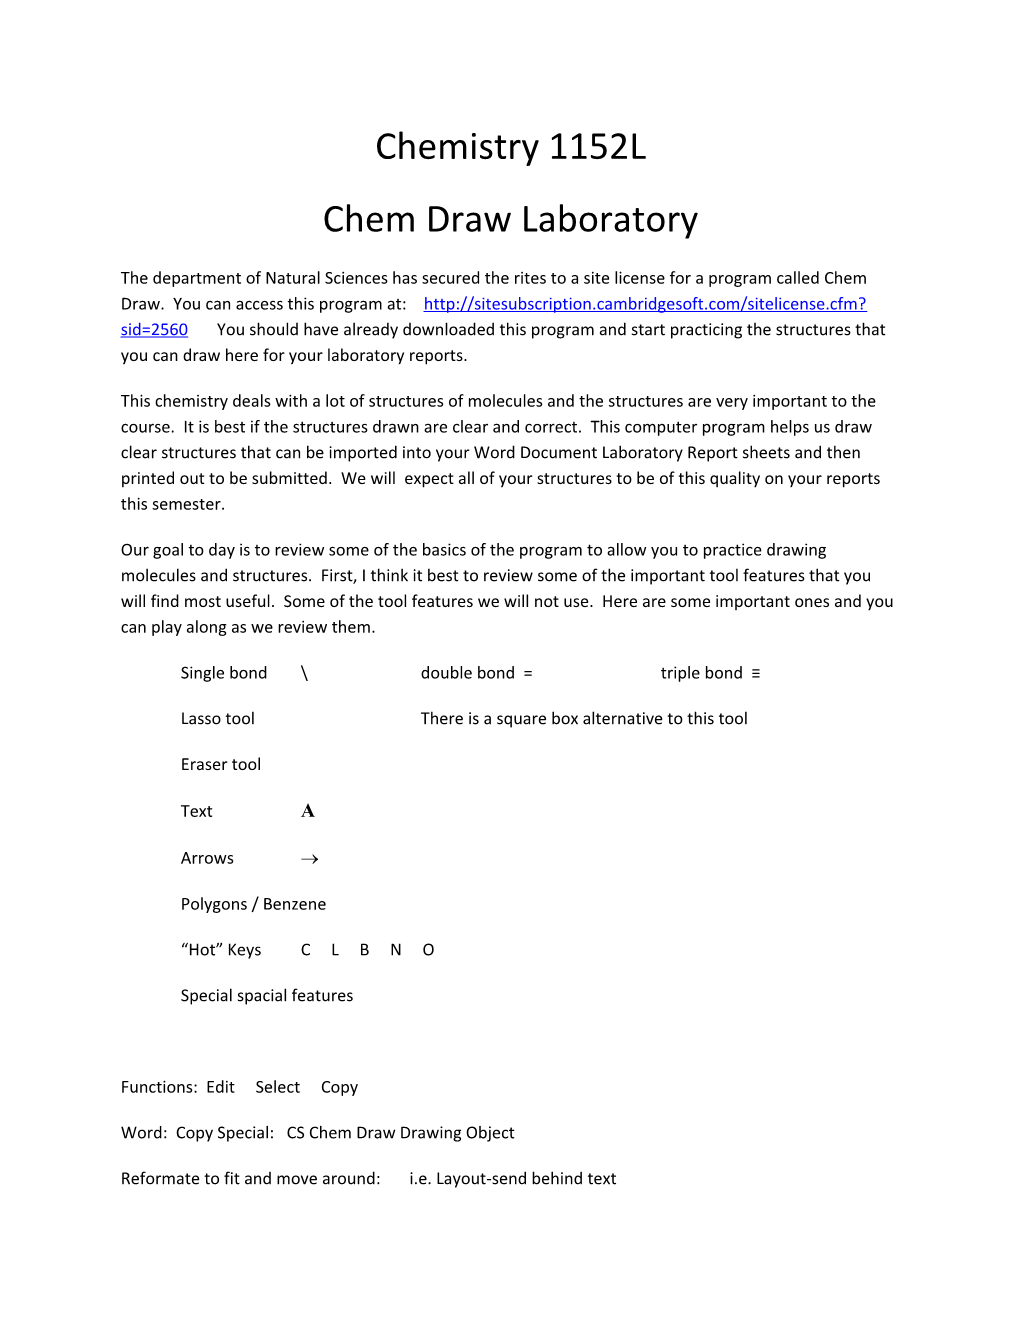 Chem Draw Laboratory